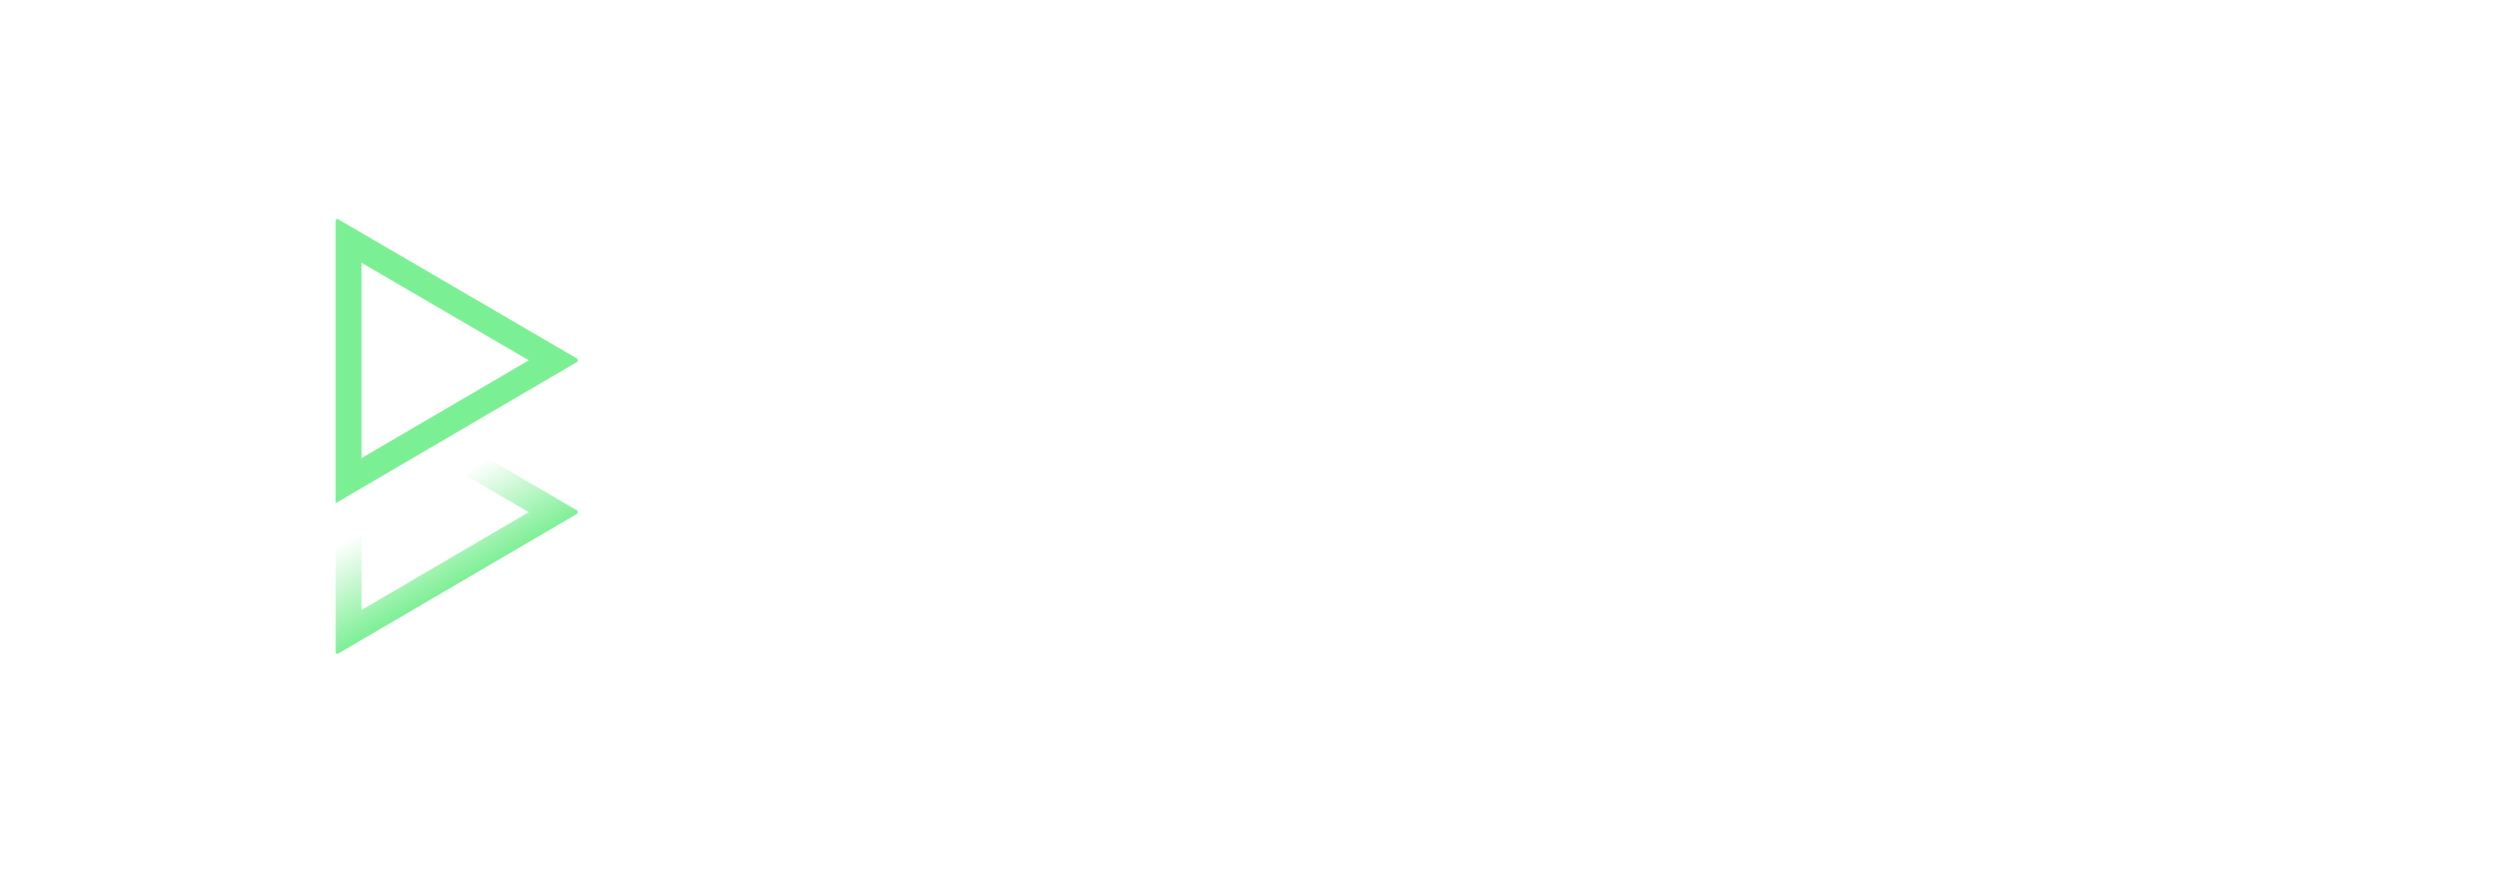 BEA  PRODUCTION